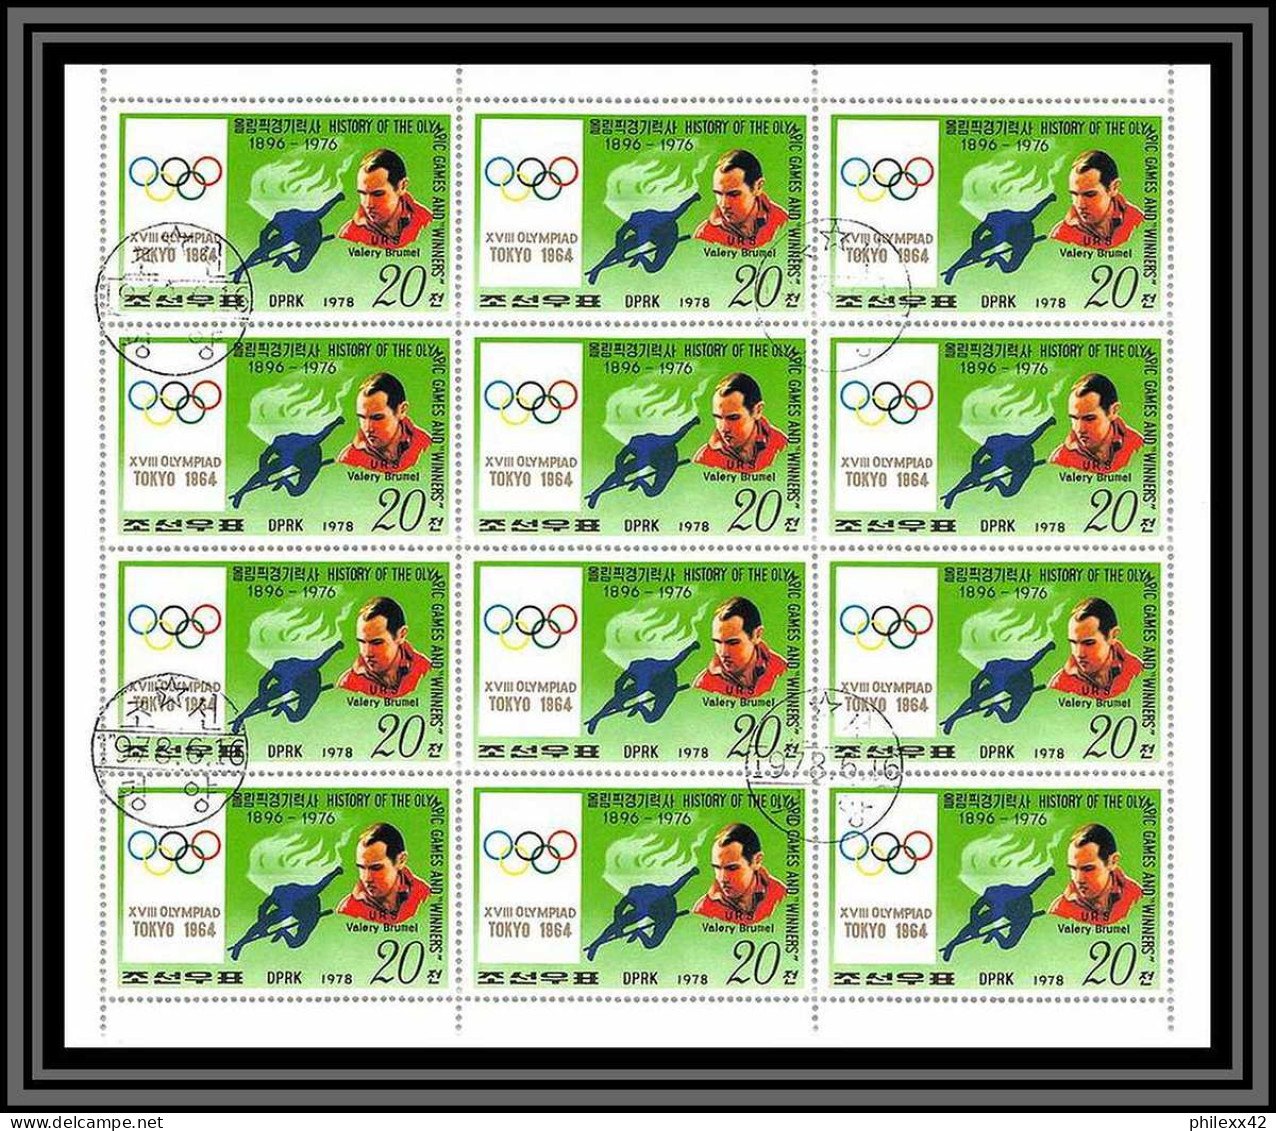 Corée (korea) Mi N° 1760/1774 Jeux olympiques (olympic games) Tokyo 64 15 feuilles sheets complet cote 72